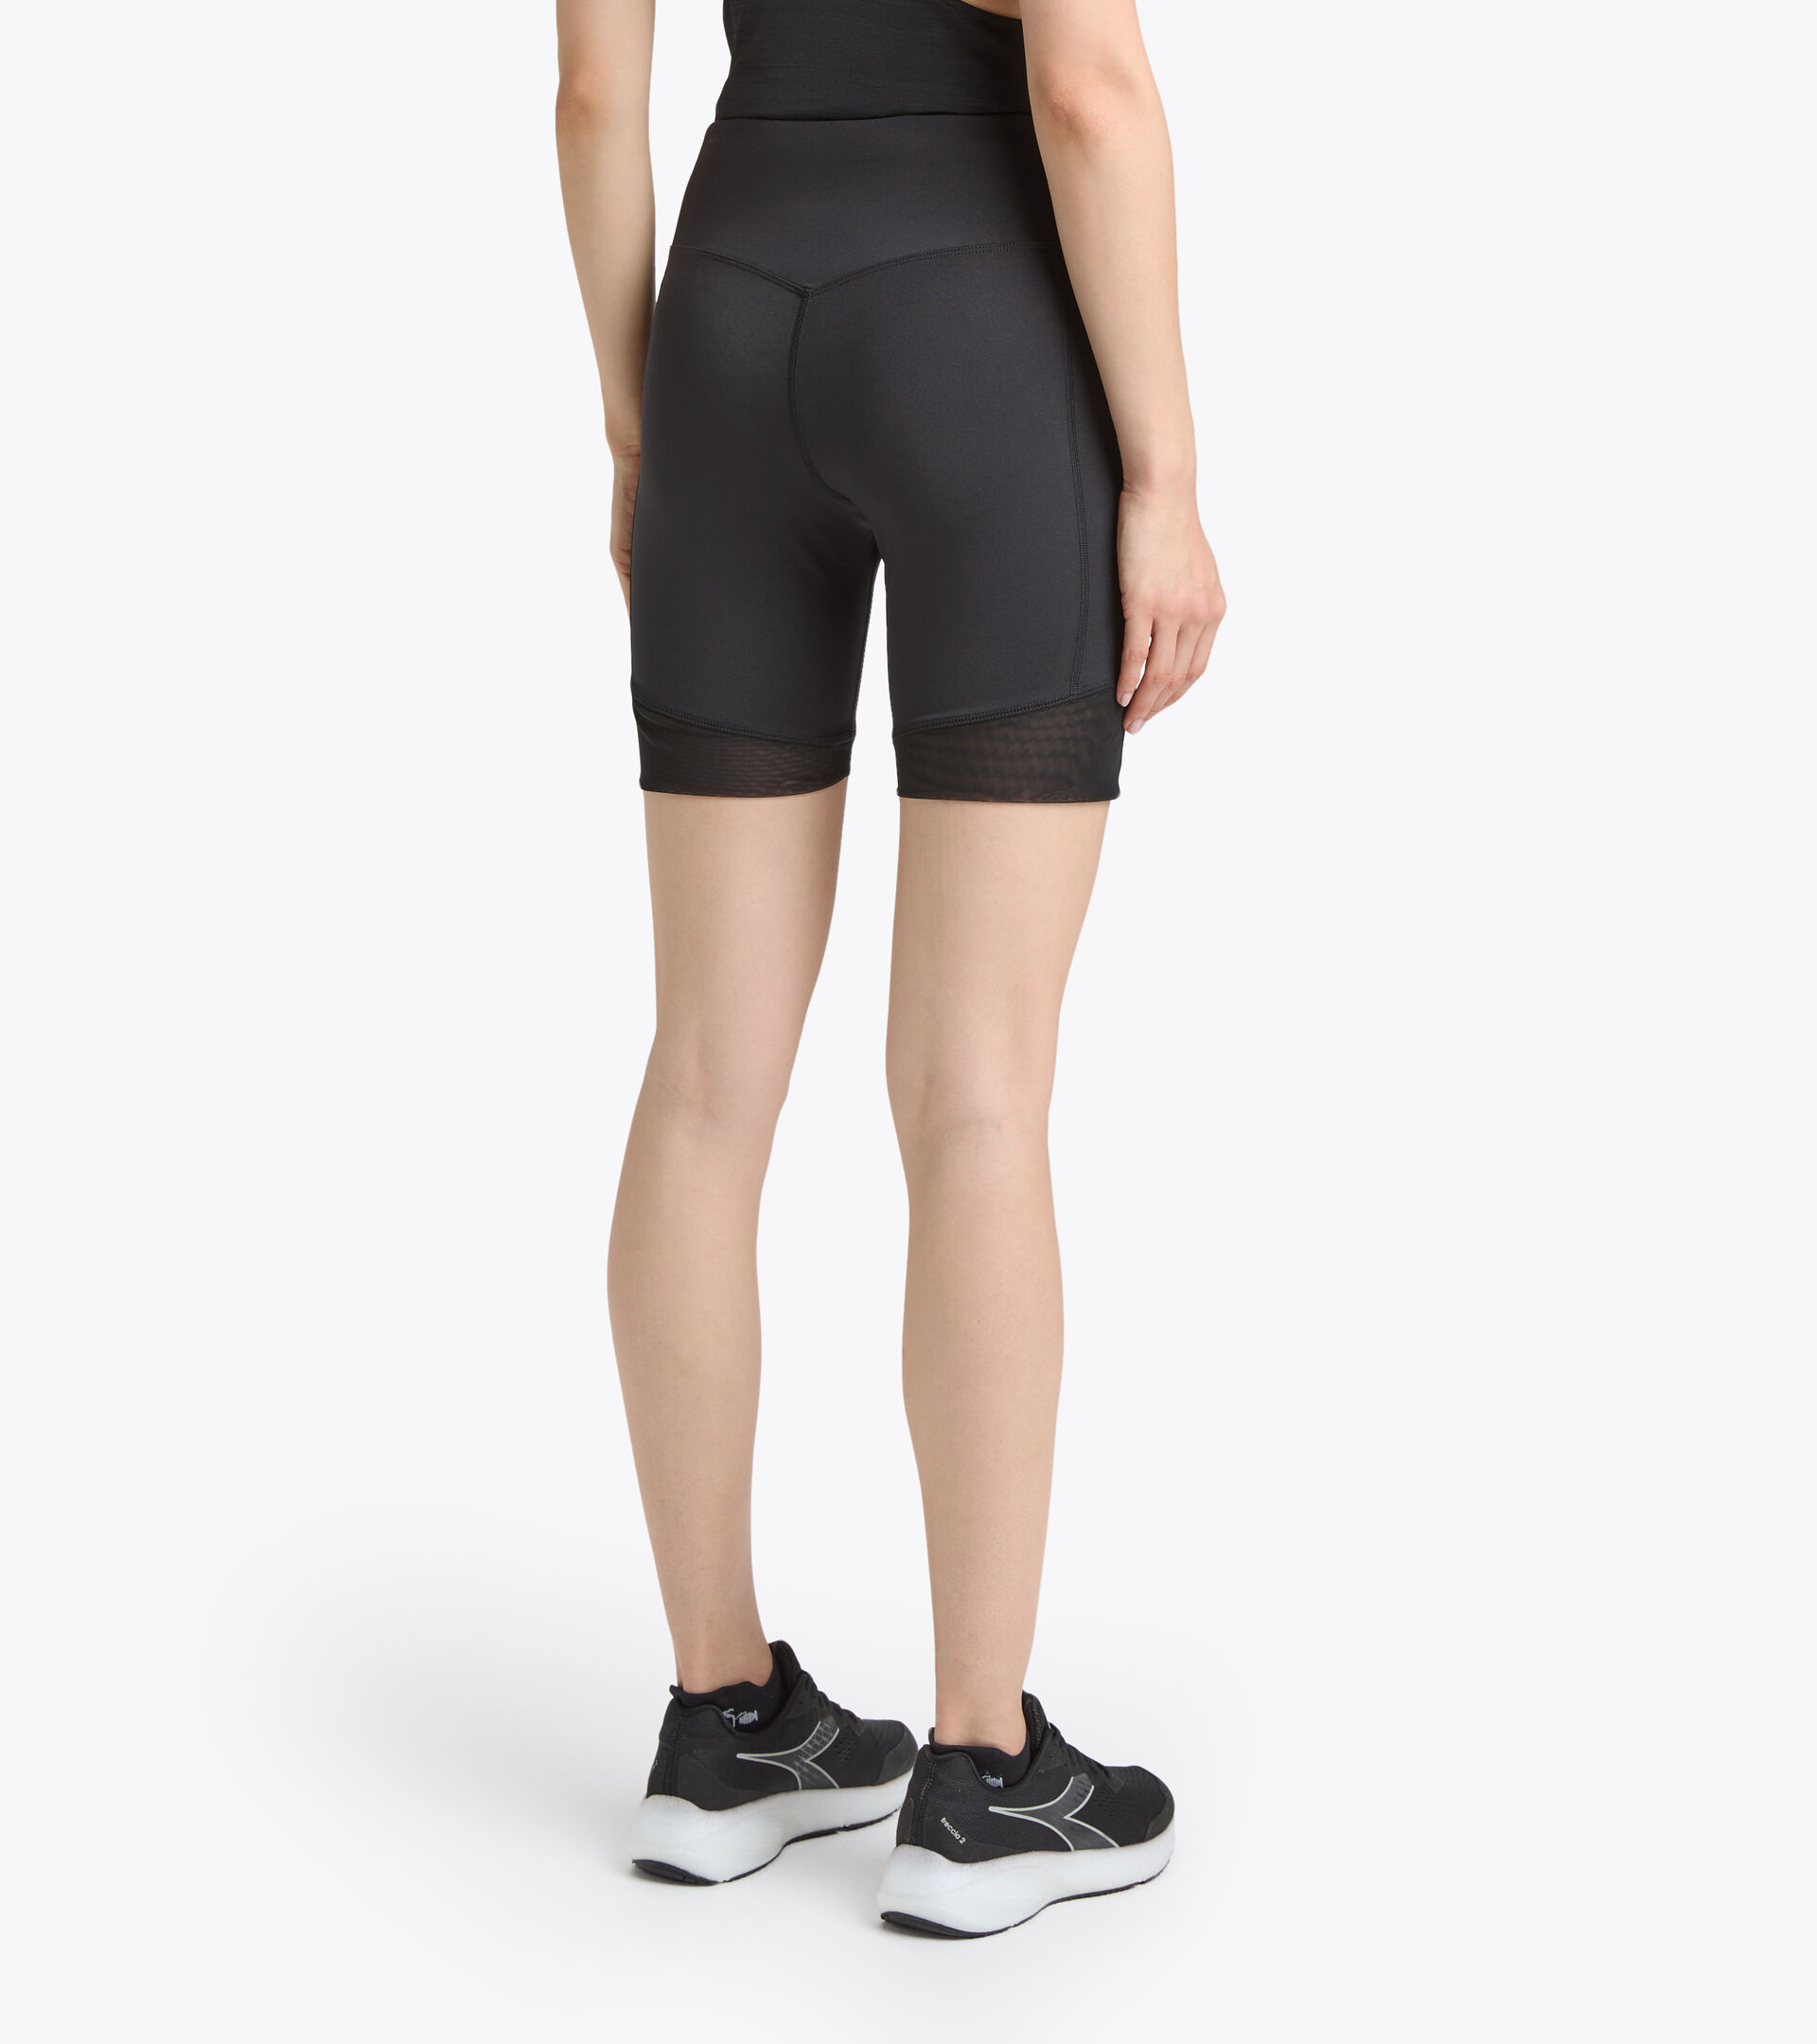 Training shorts - Women’s L. BIKE SHORTS BUDDYFIT BLACK - Diadora